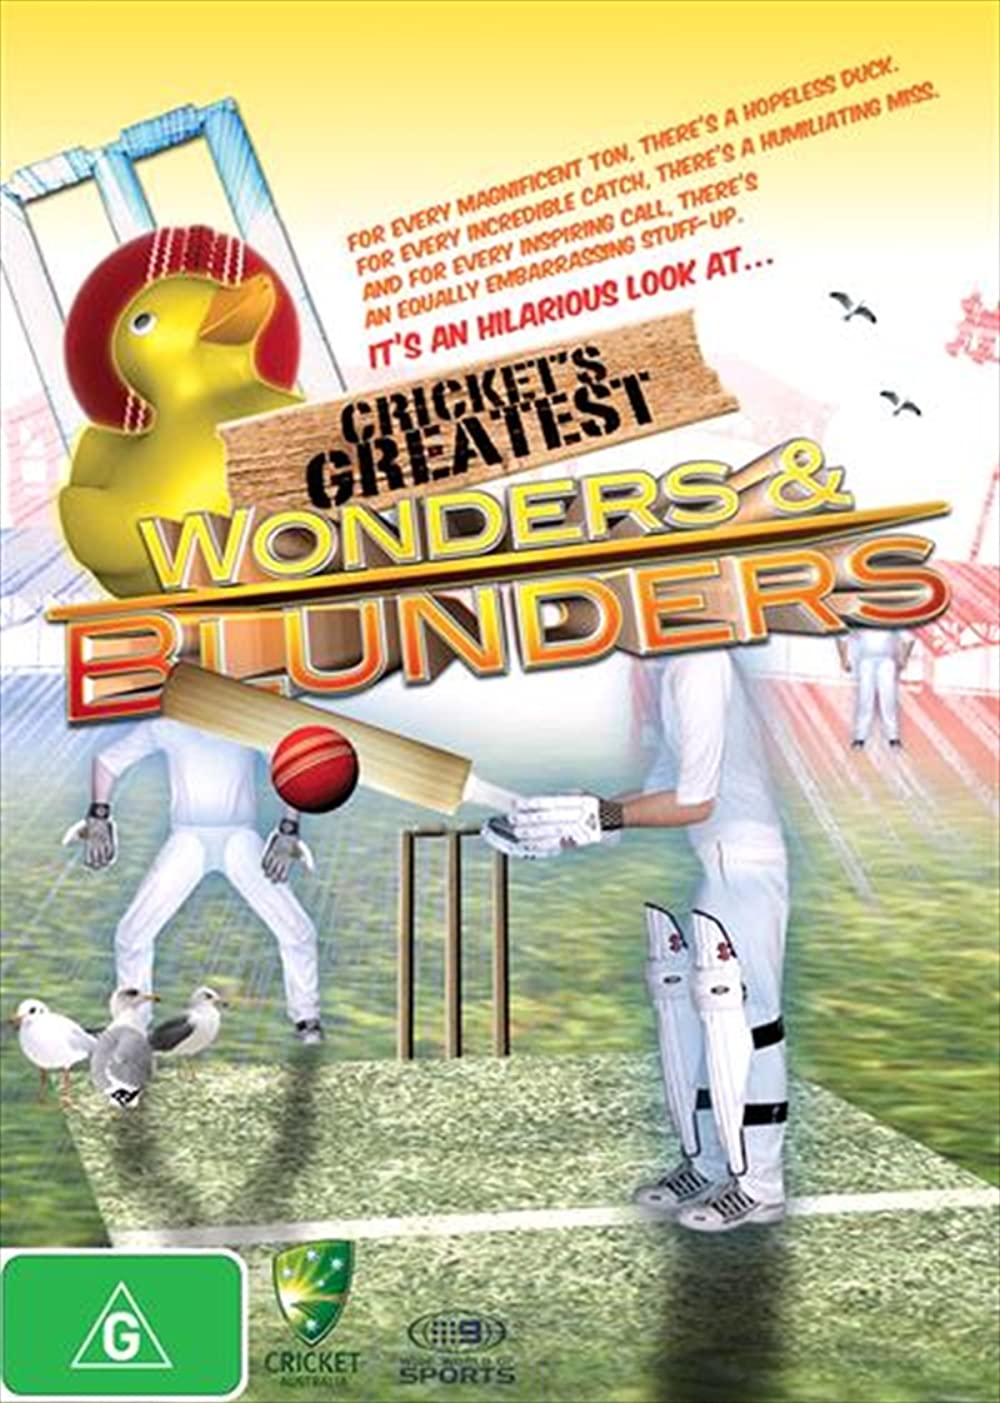 Download Cricket's Greatest Blunders & Wonders Movie | Cricket's Greatest Blunders & Wonders Hd, Dvd, Divx